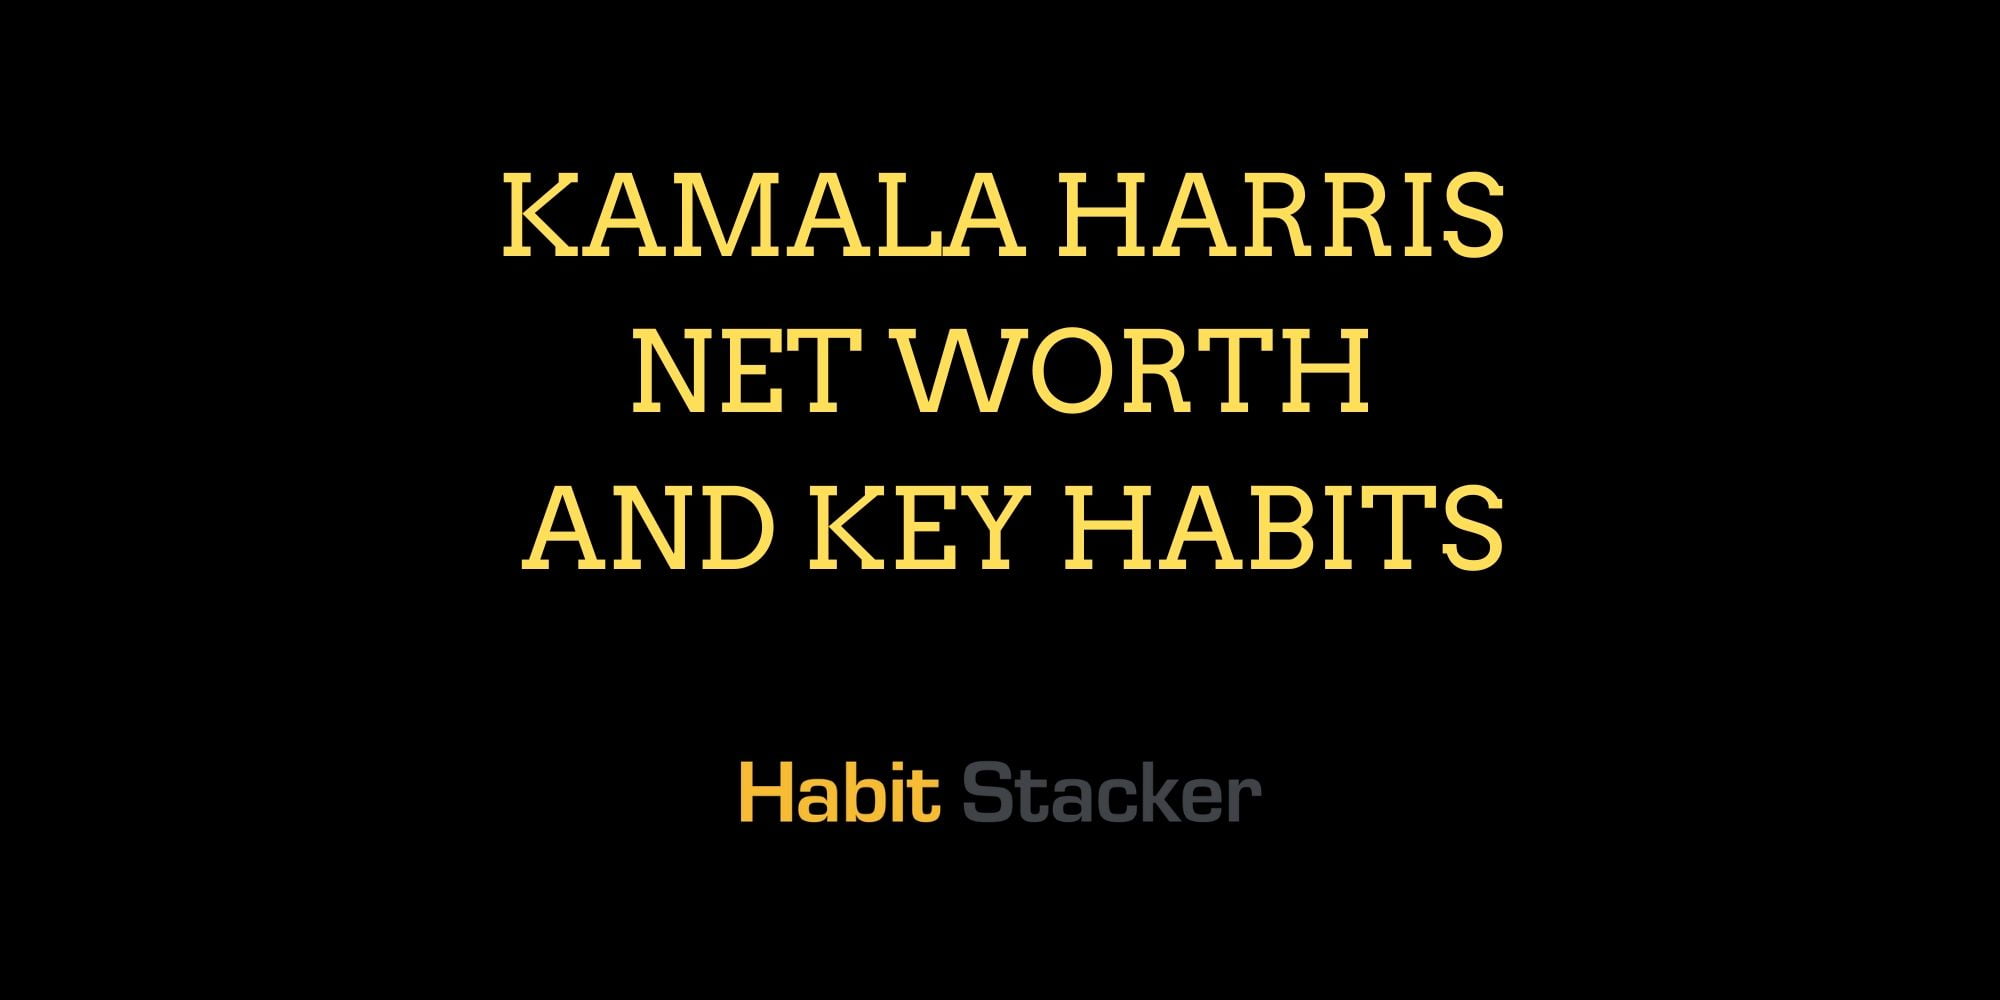 James Hetfield Net Worth and Key Habits (1)